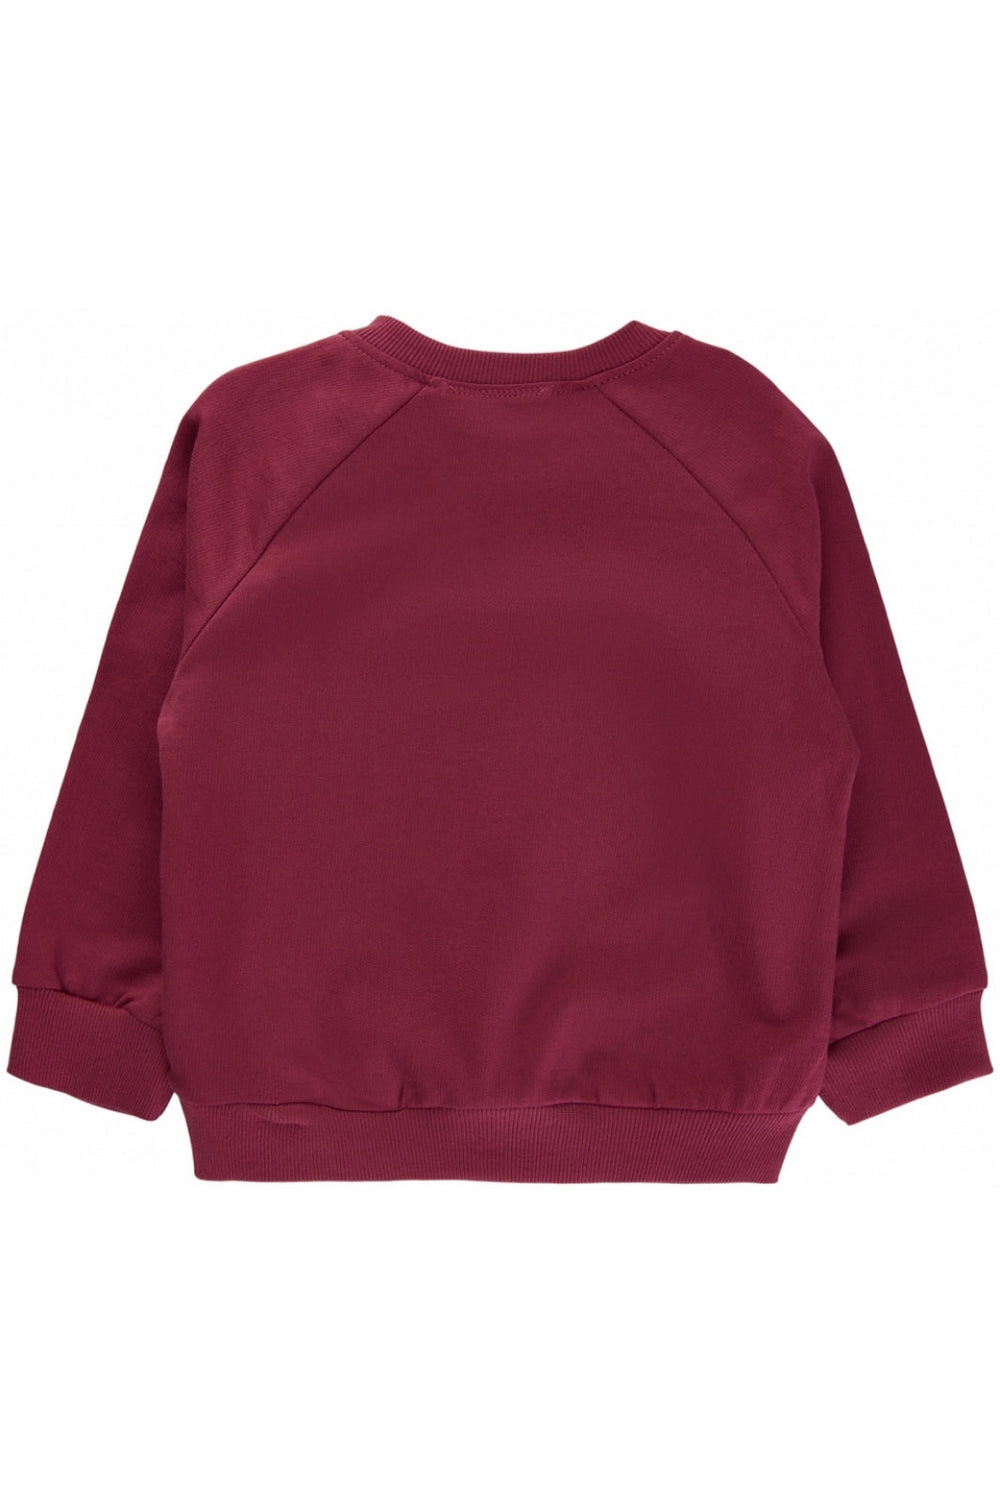 The New Siblings - Tnsdelores Sweatshirt - Maroon Sweatshirts 